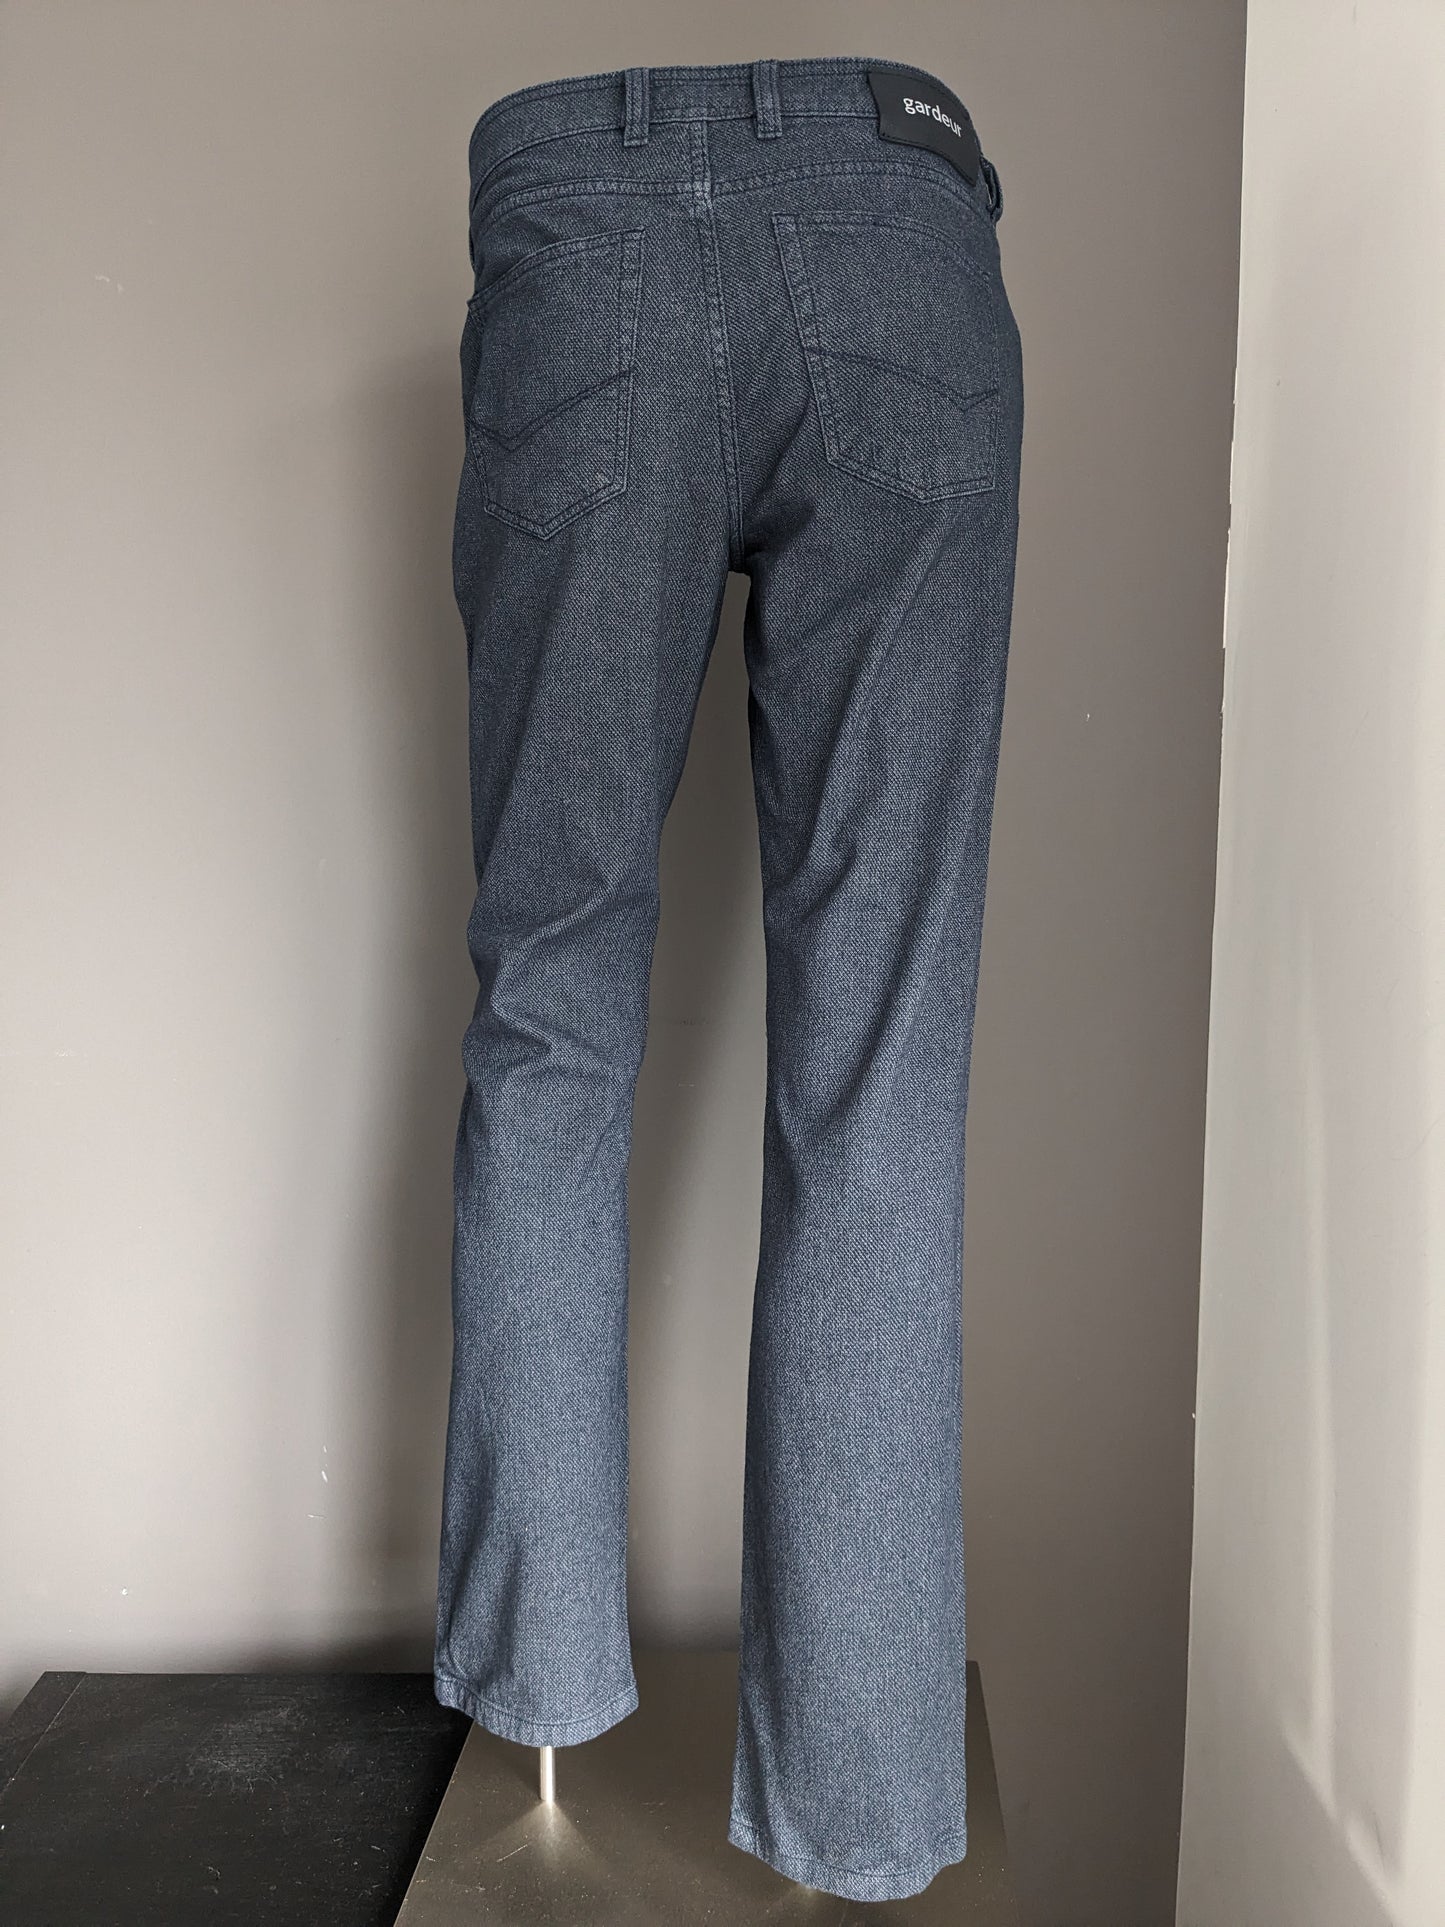 Pantalones / pantalones de gardeur. Gris azul mezclado. Fit moderno. Tamaño 34 - L34.